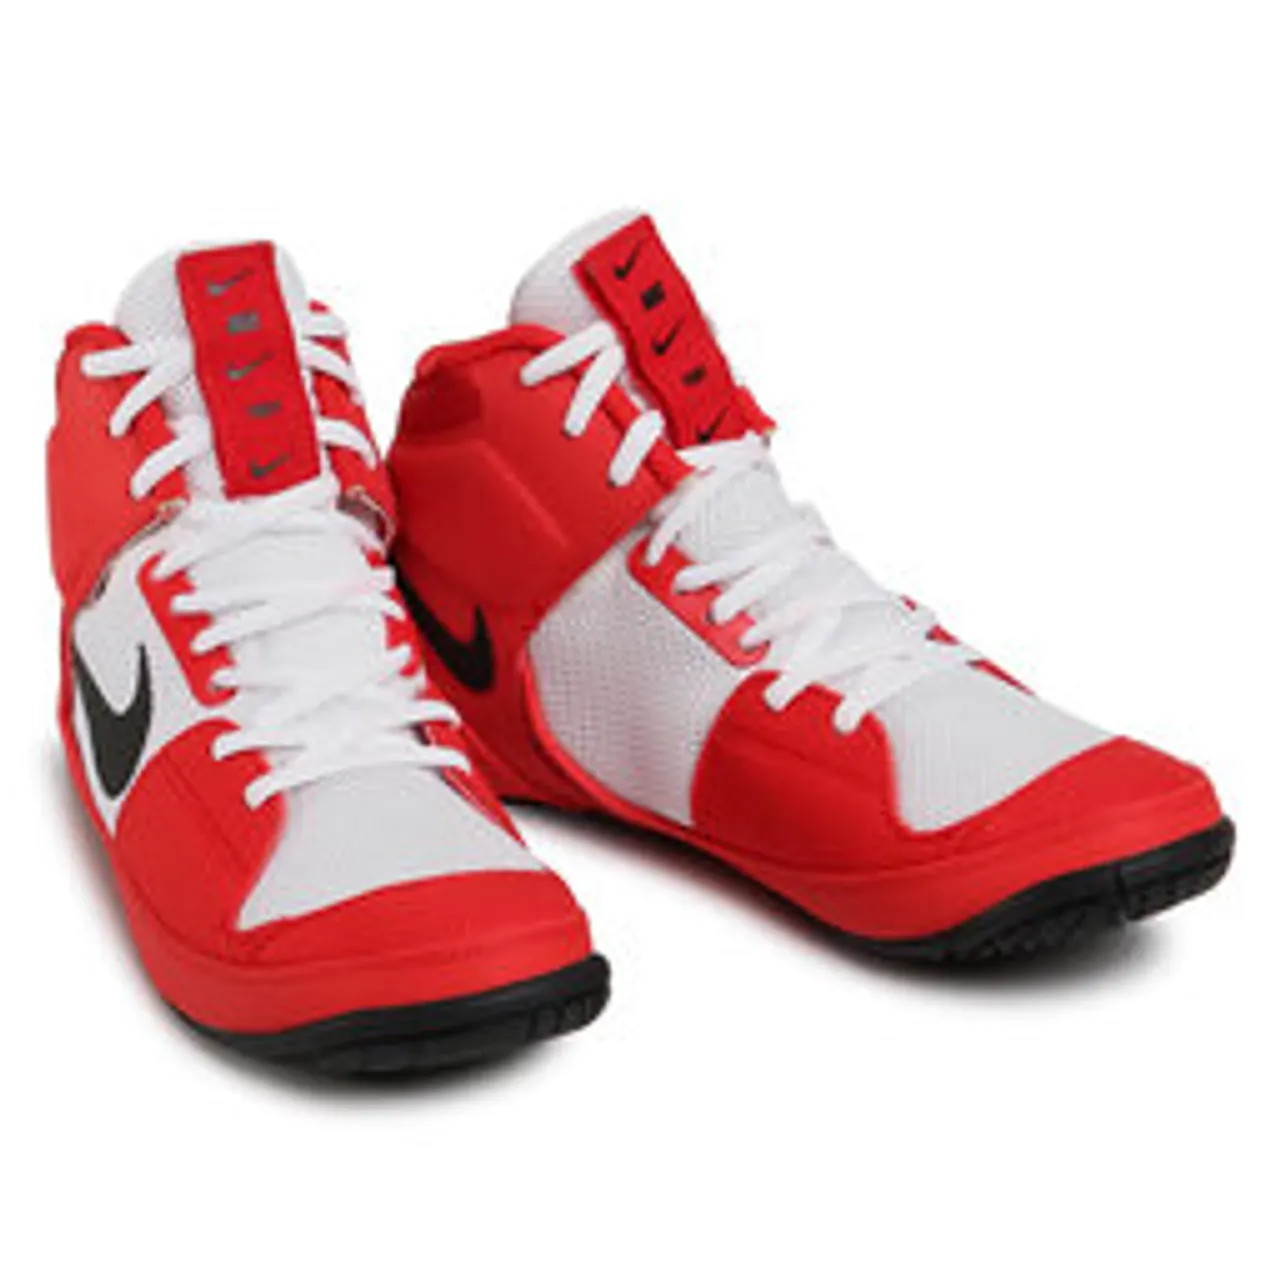 Schuhe Nike Fury A02416 601 University Red/Black/White